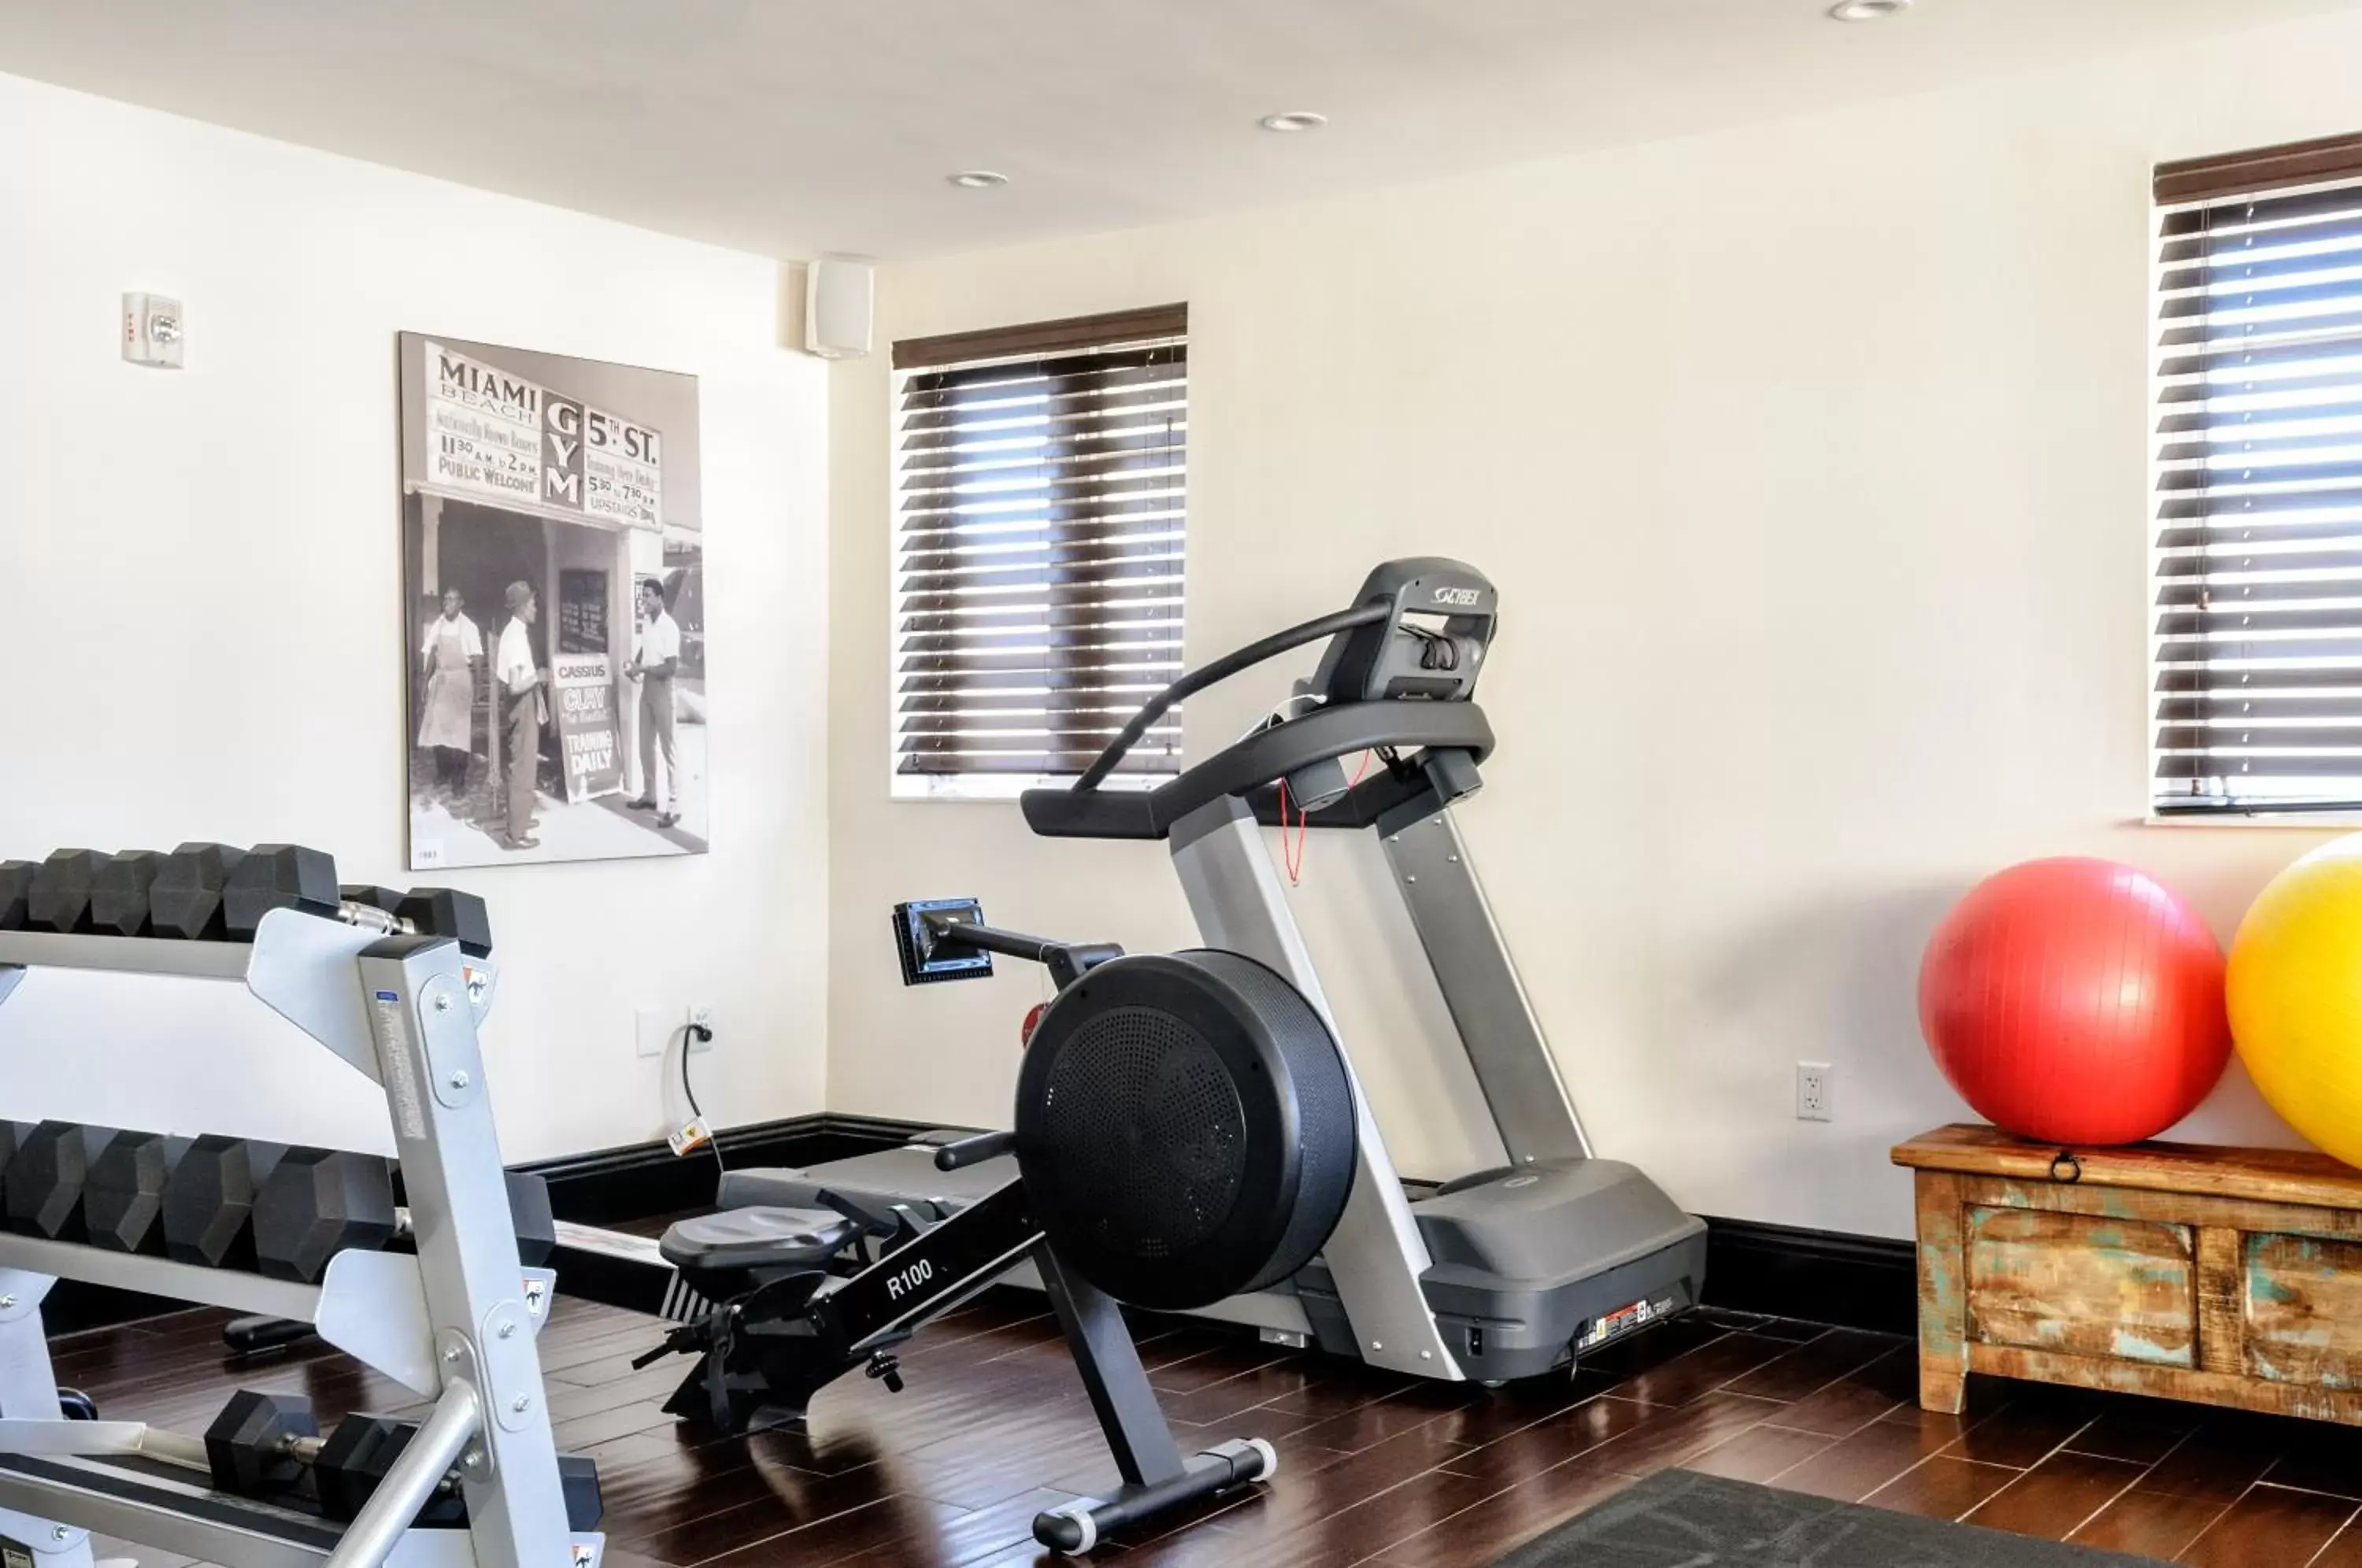 Fitness centre/facilities, Fitness Center/Facilities in Hotel Croydon